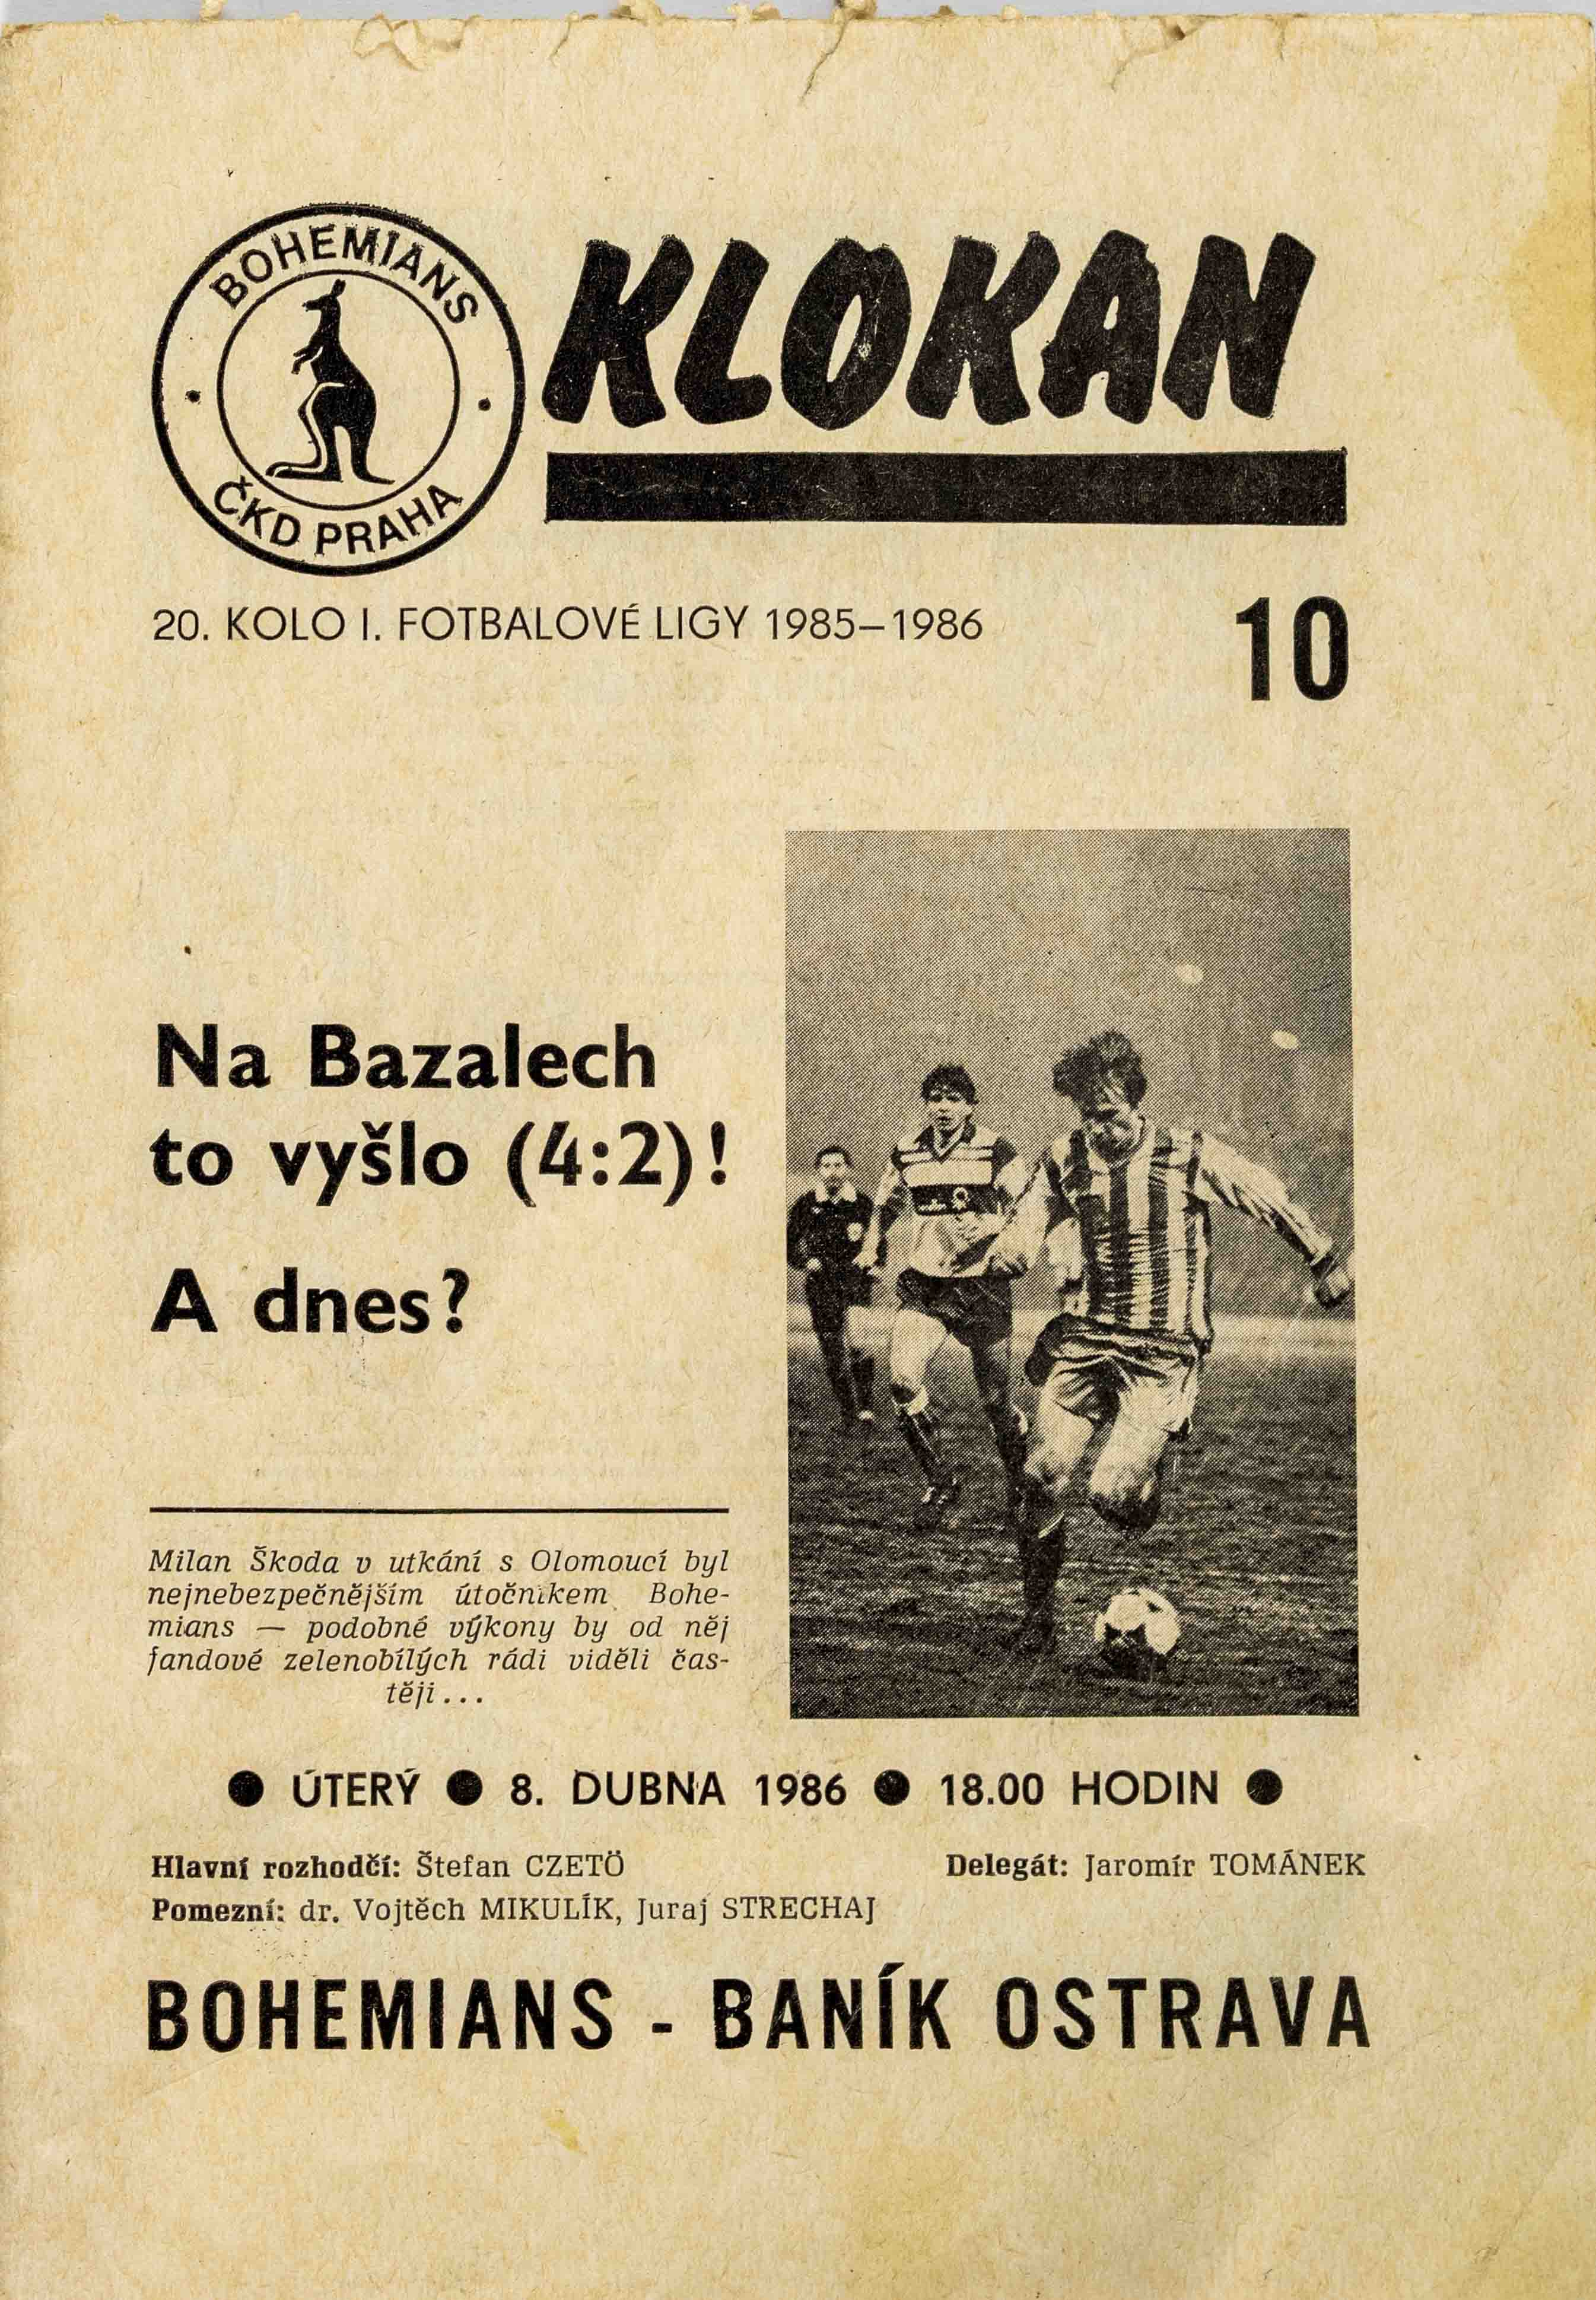 Program Klokan, FC Bohemians vs. Baník Ostrava, 1985/86 (10